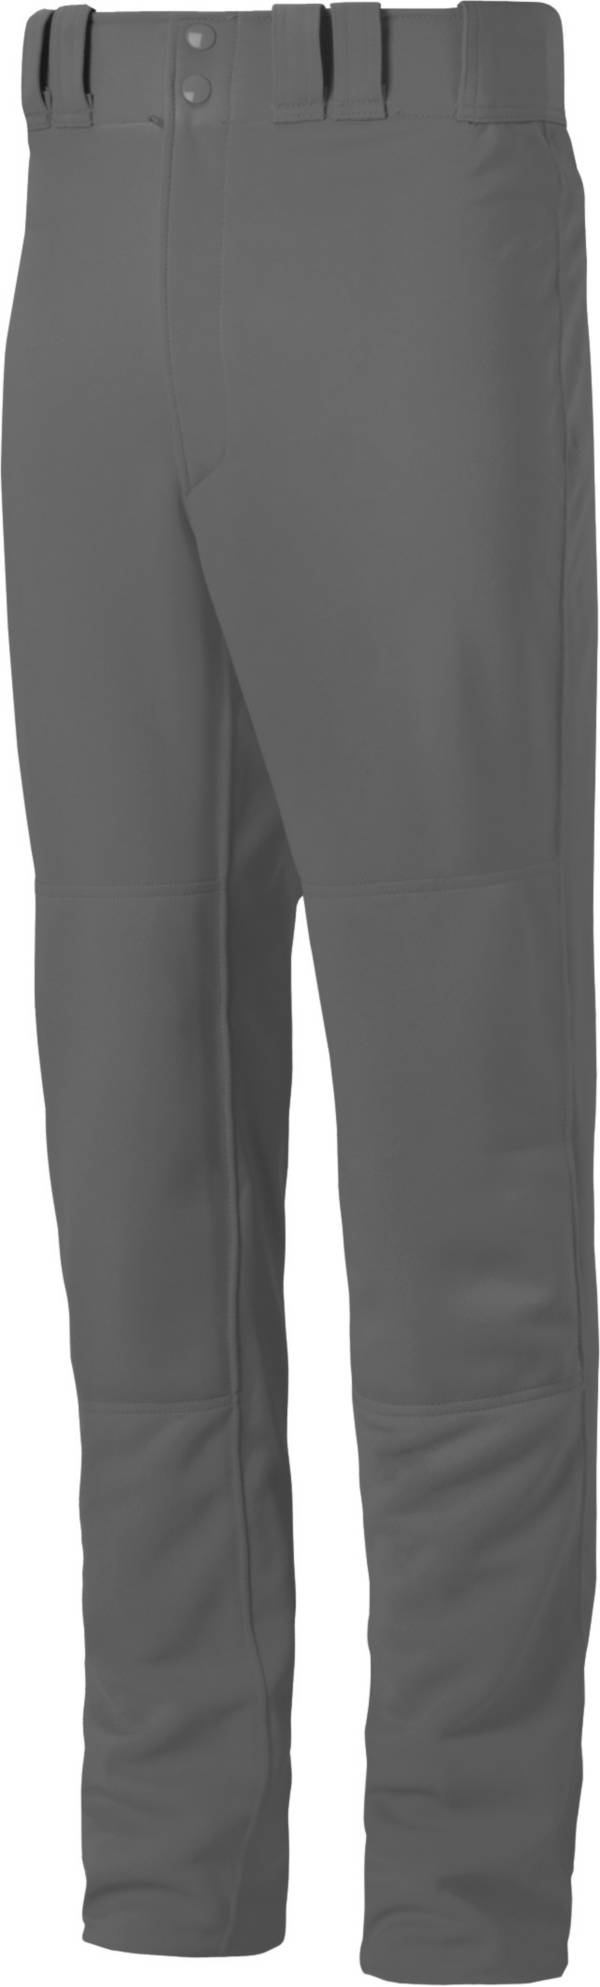 Mizuno Boys' Select Pro G2 Baseball Pants product image